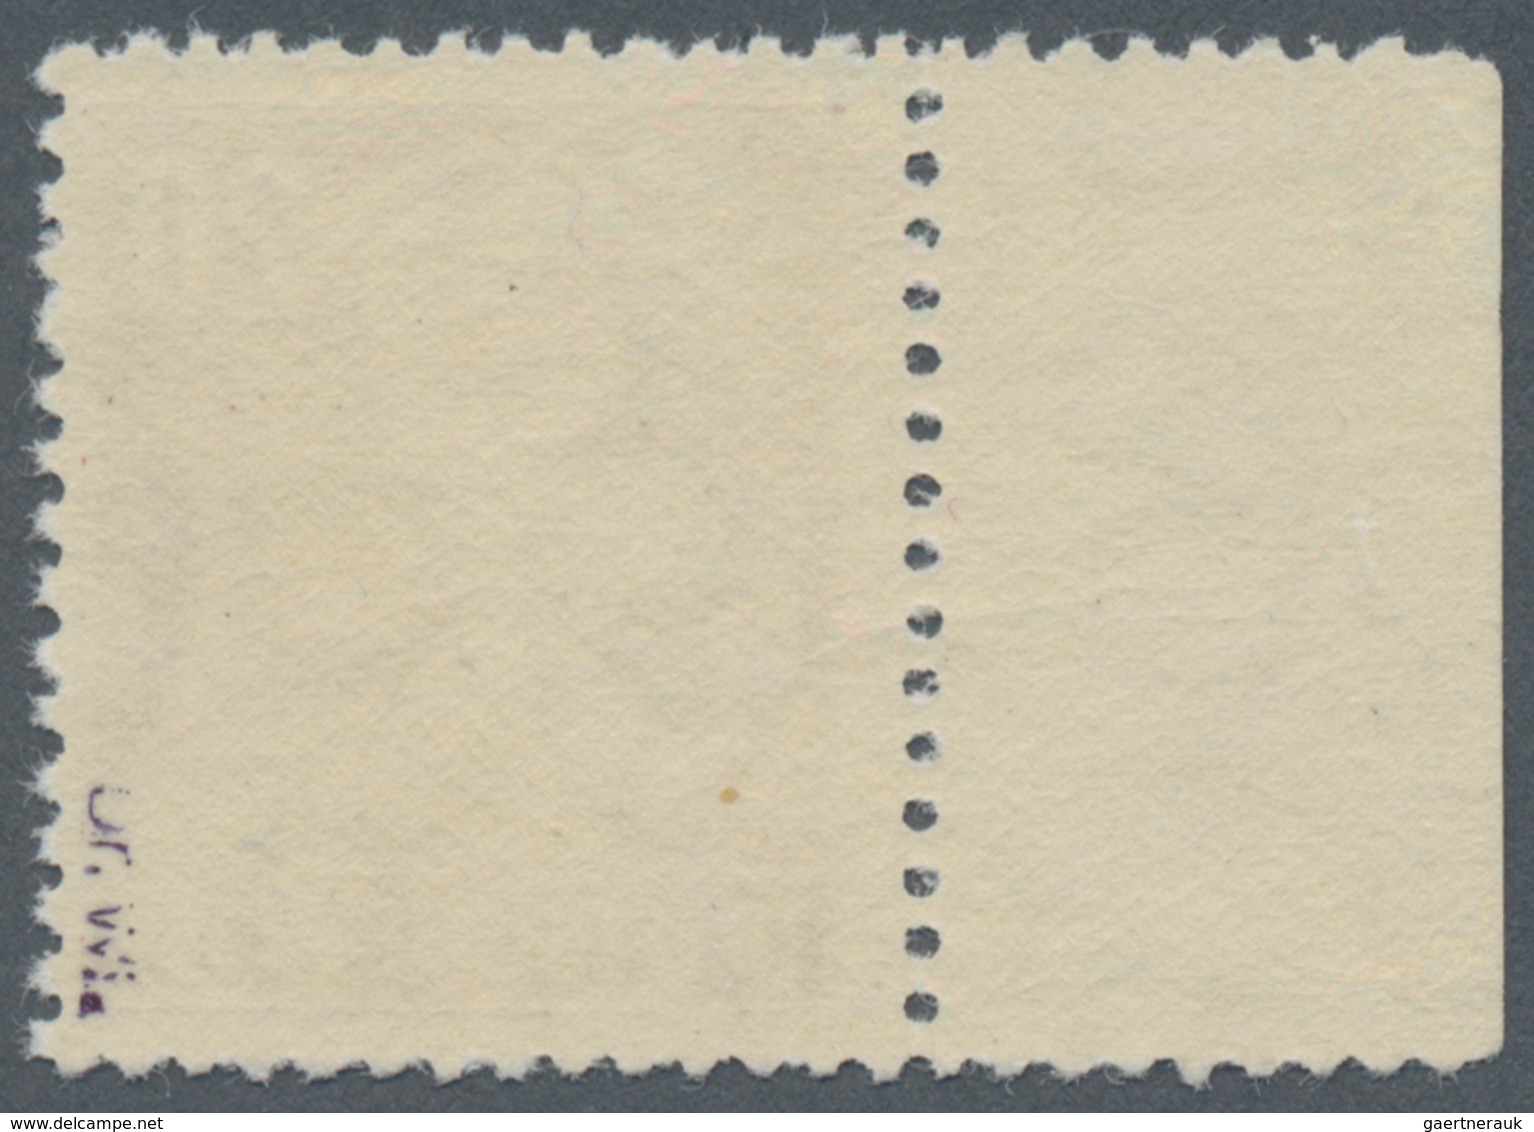 DDR: 1953, 20 Pfg. Köpfe II, Käthe Kollwitz Lebhatkarminrot Auf Gestrichenem Papier Mit Senkrechtem - Covers & Documents